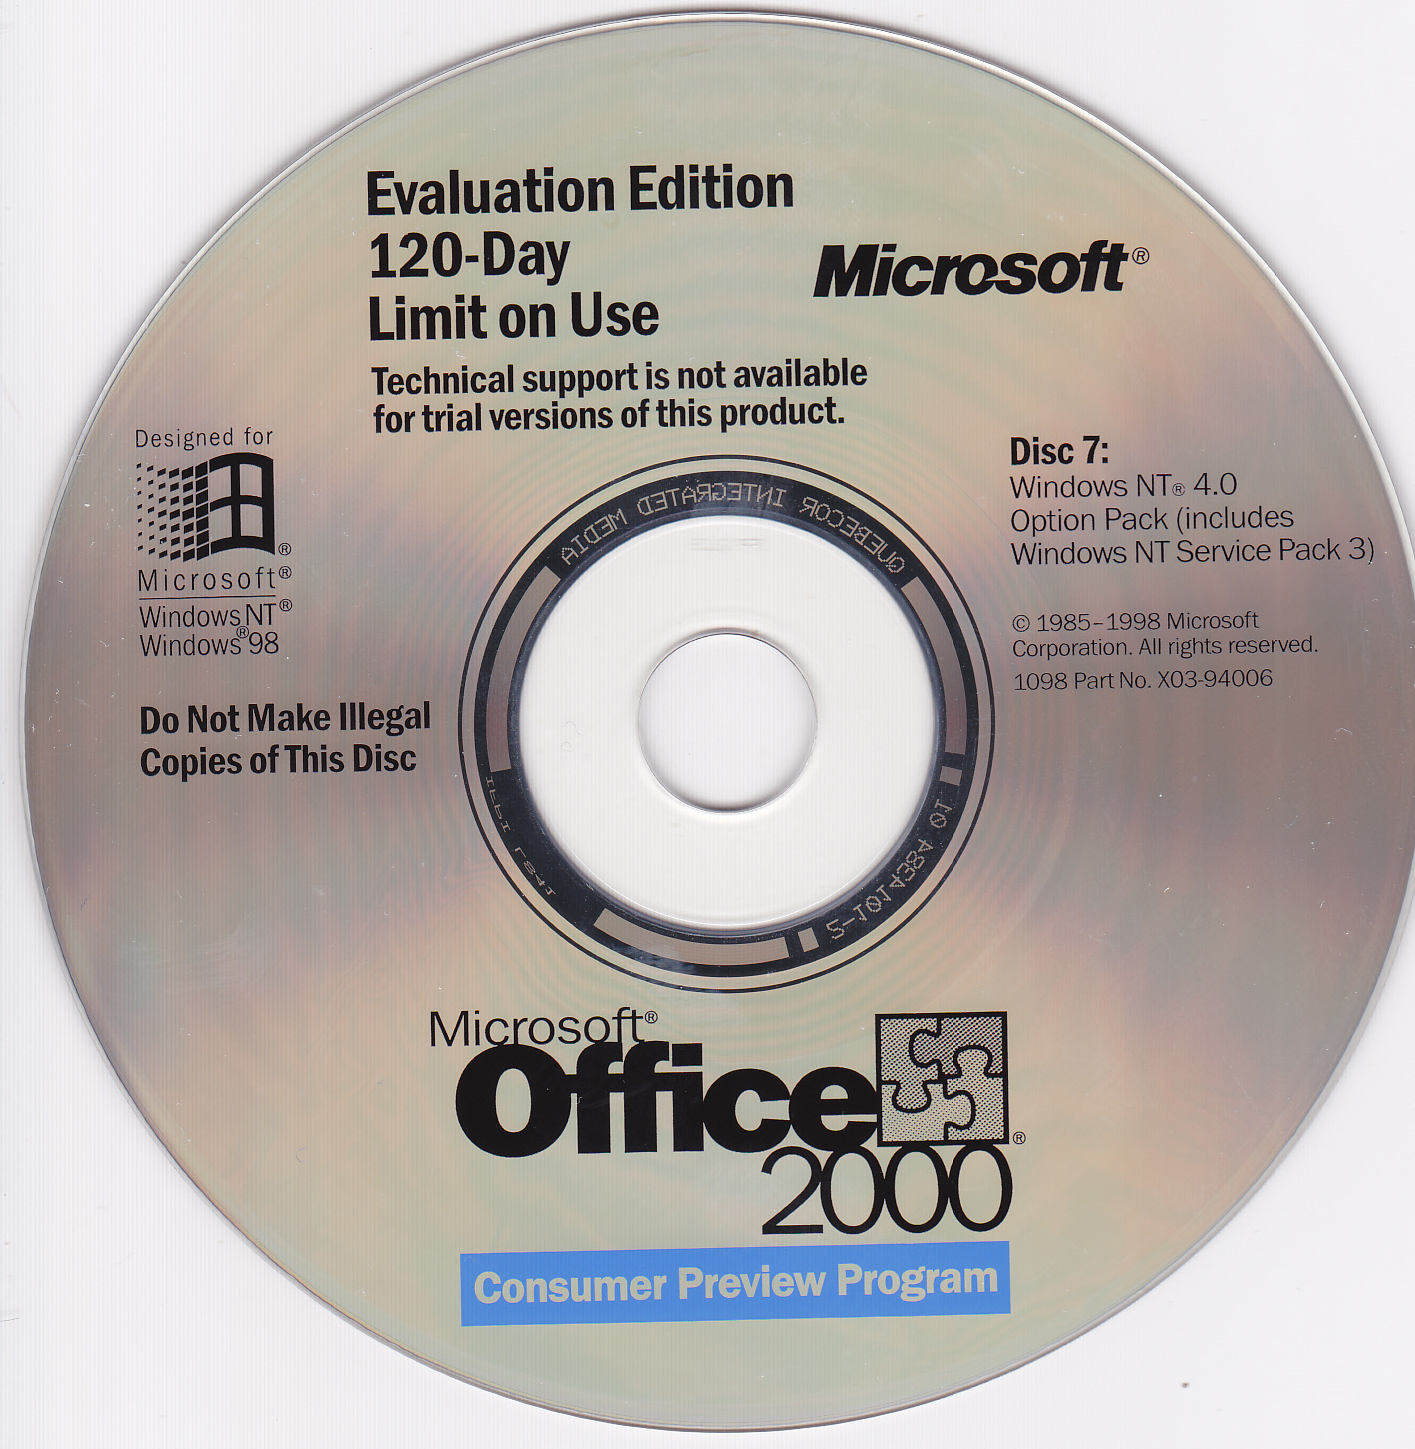 Microsoft Office 2000 Beta 2 Consumer Preview Program : Free